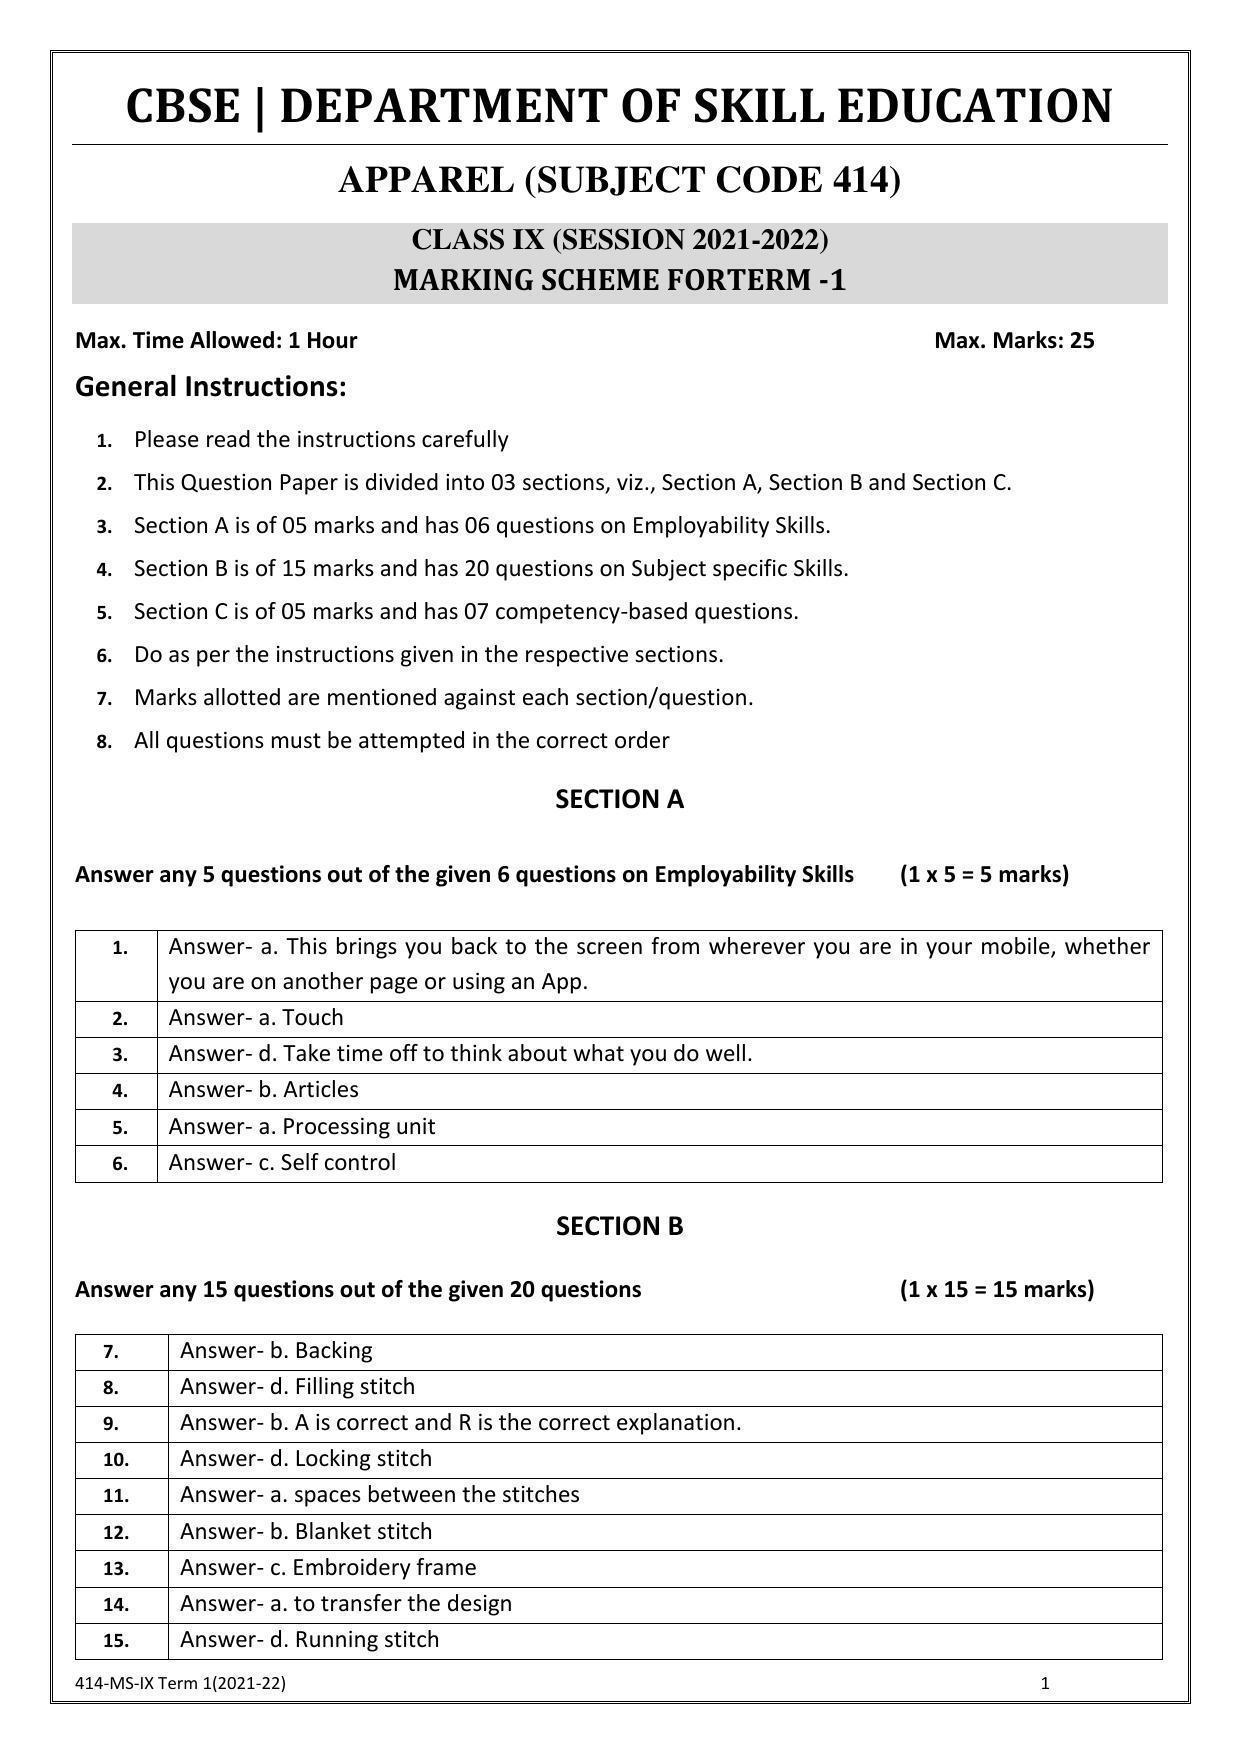 CBSE Class 10 Skill Education (Term I) - Apparel Marking Scheme 2021-22 - Page 1